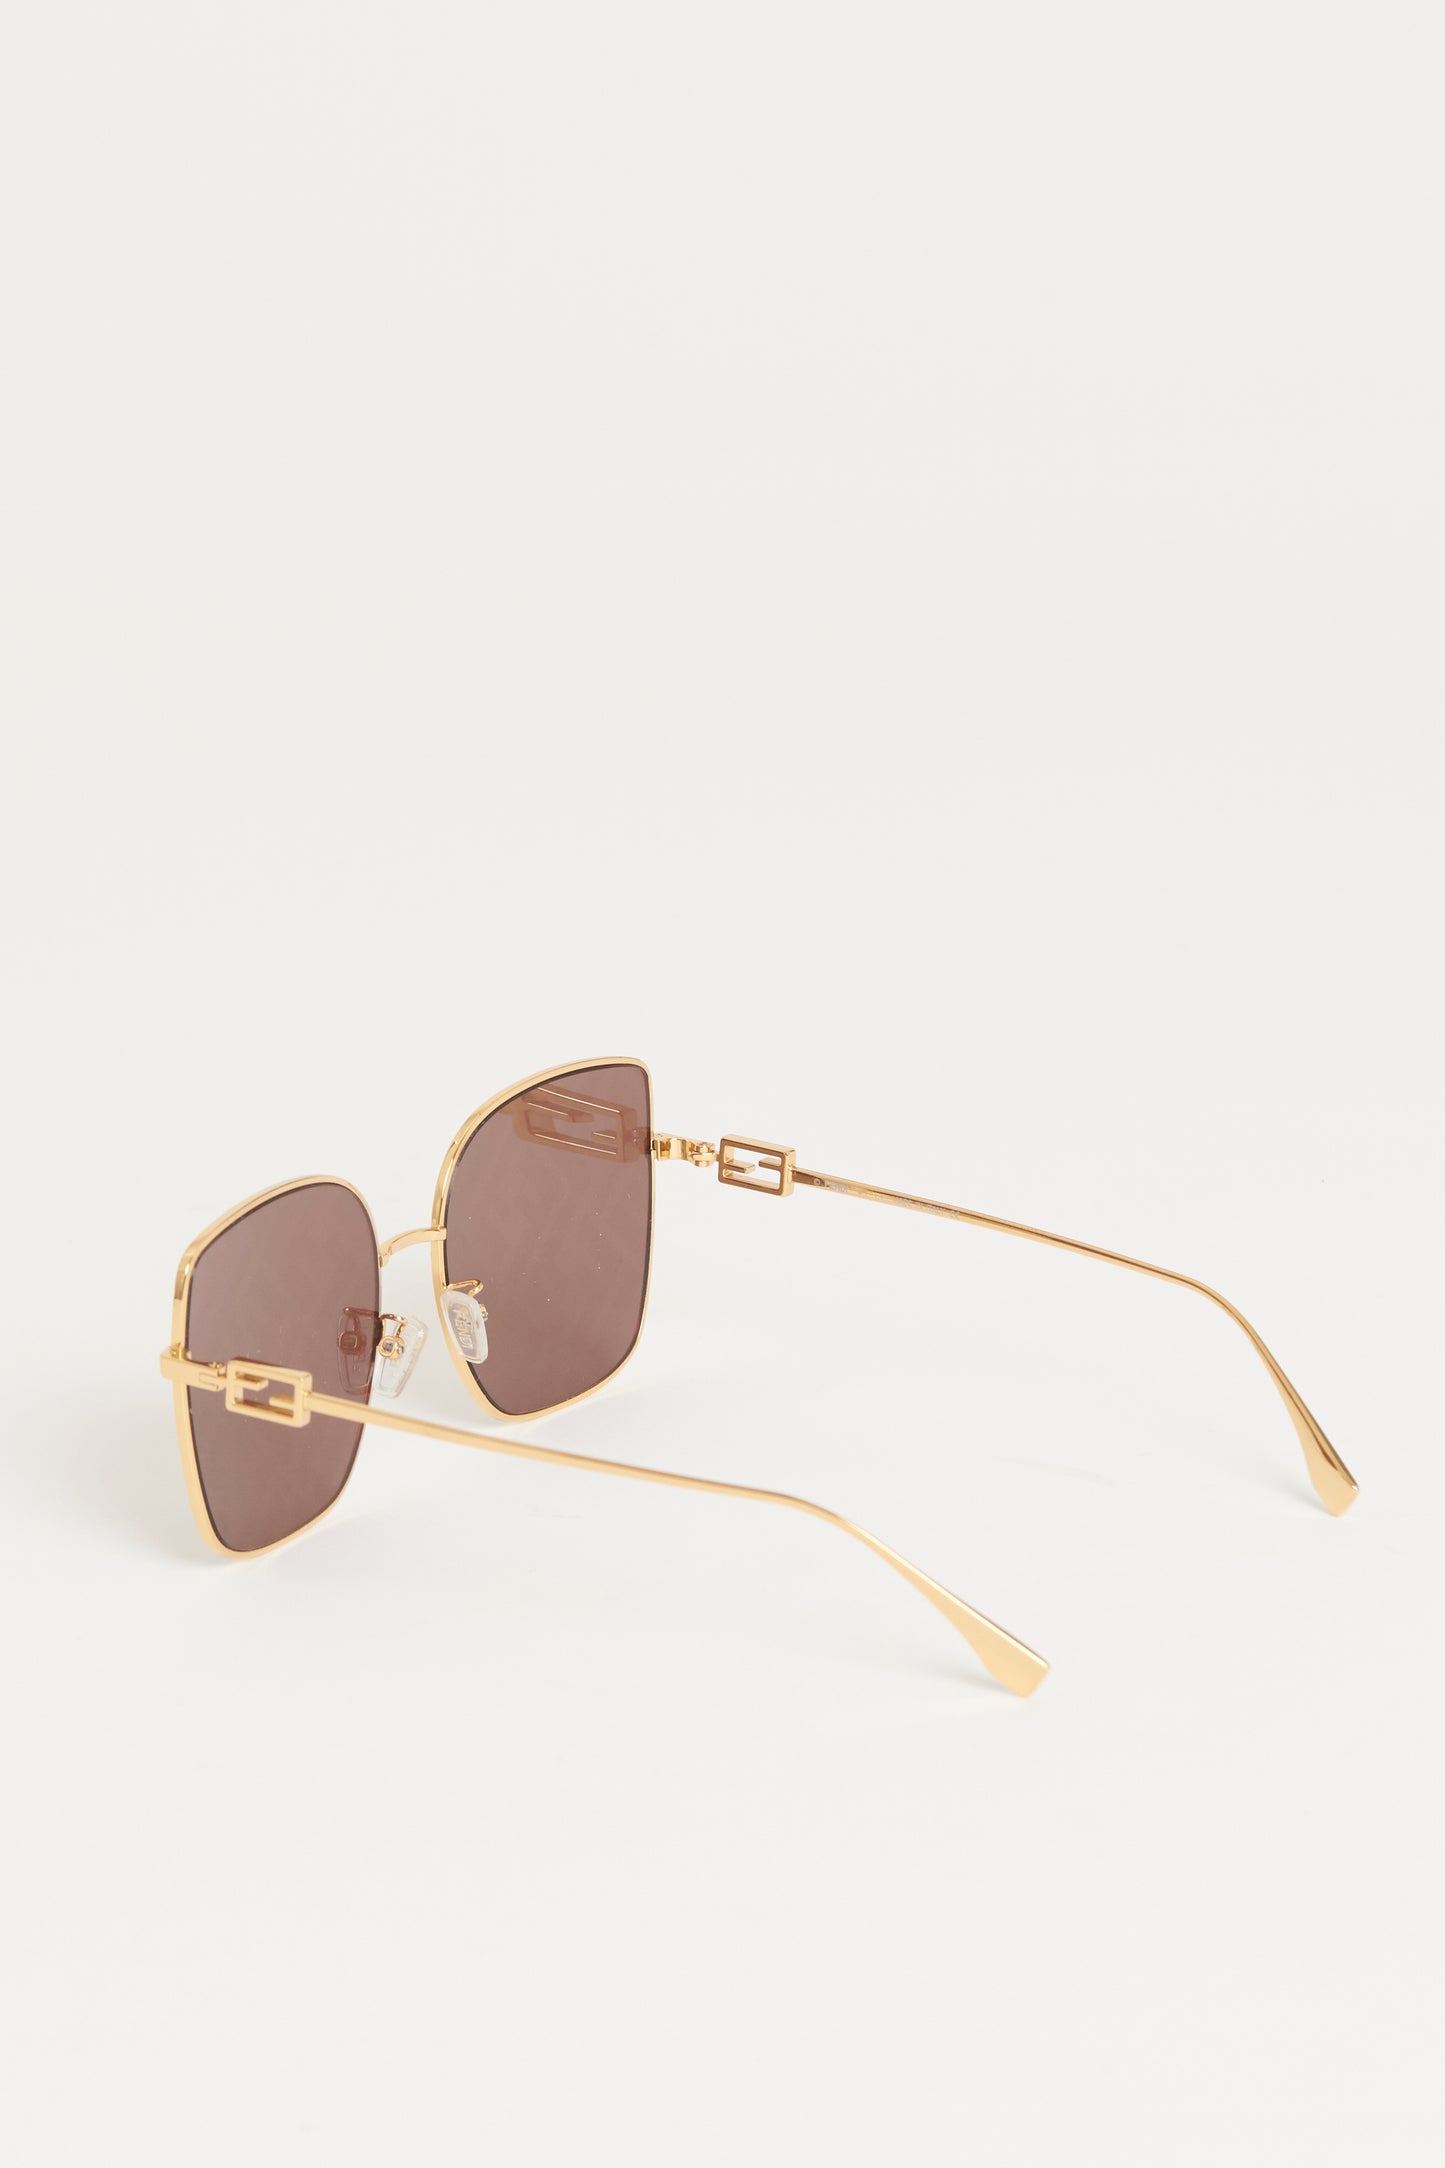 Gold Tone Metal Preowned Baguette Sunglasses